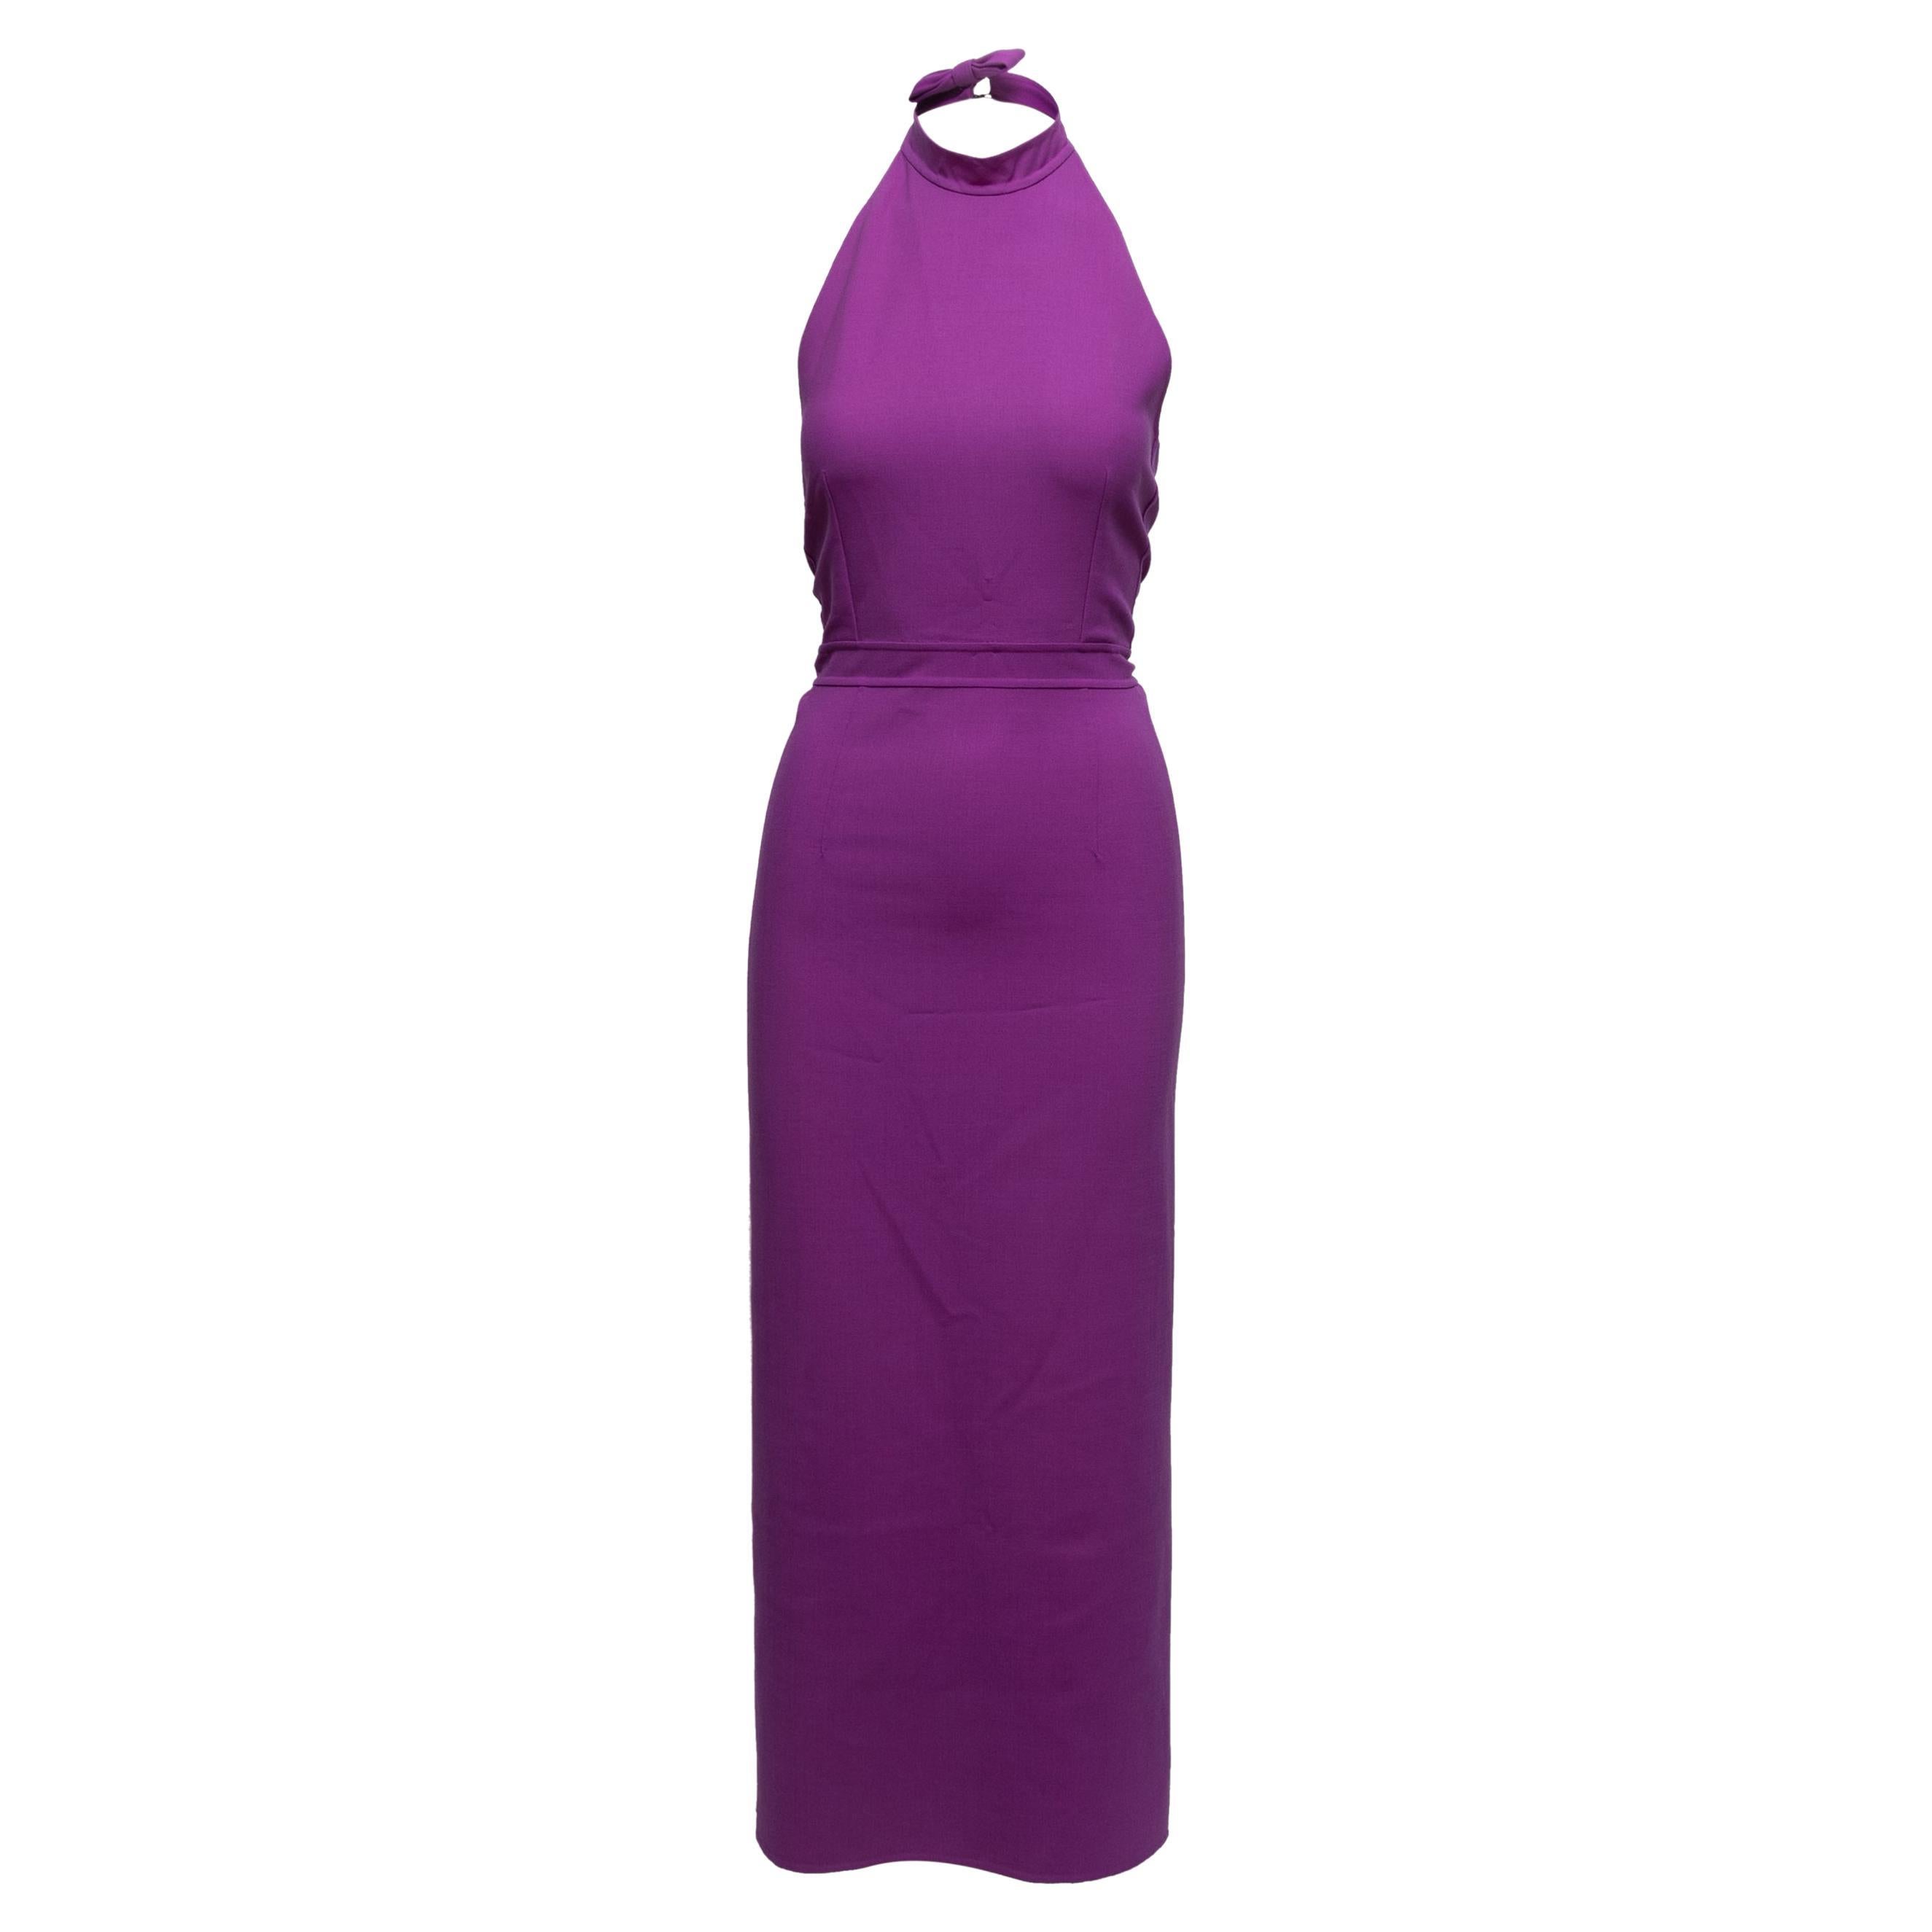 Purple Oscar de la Renta Bow Halter Dress Size US S